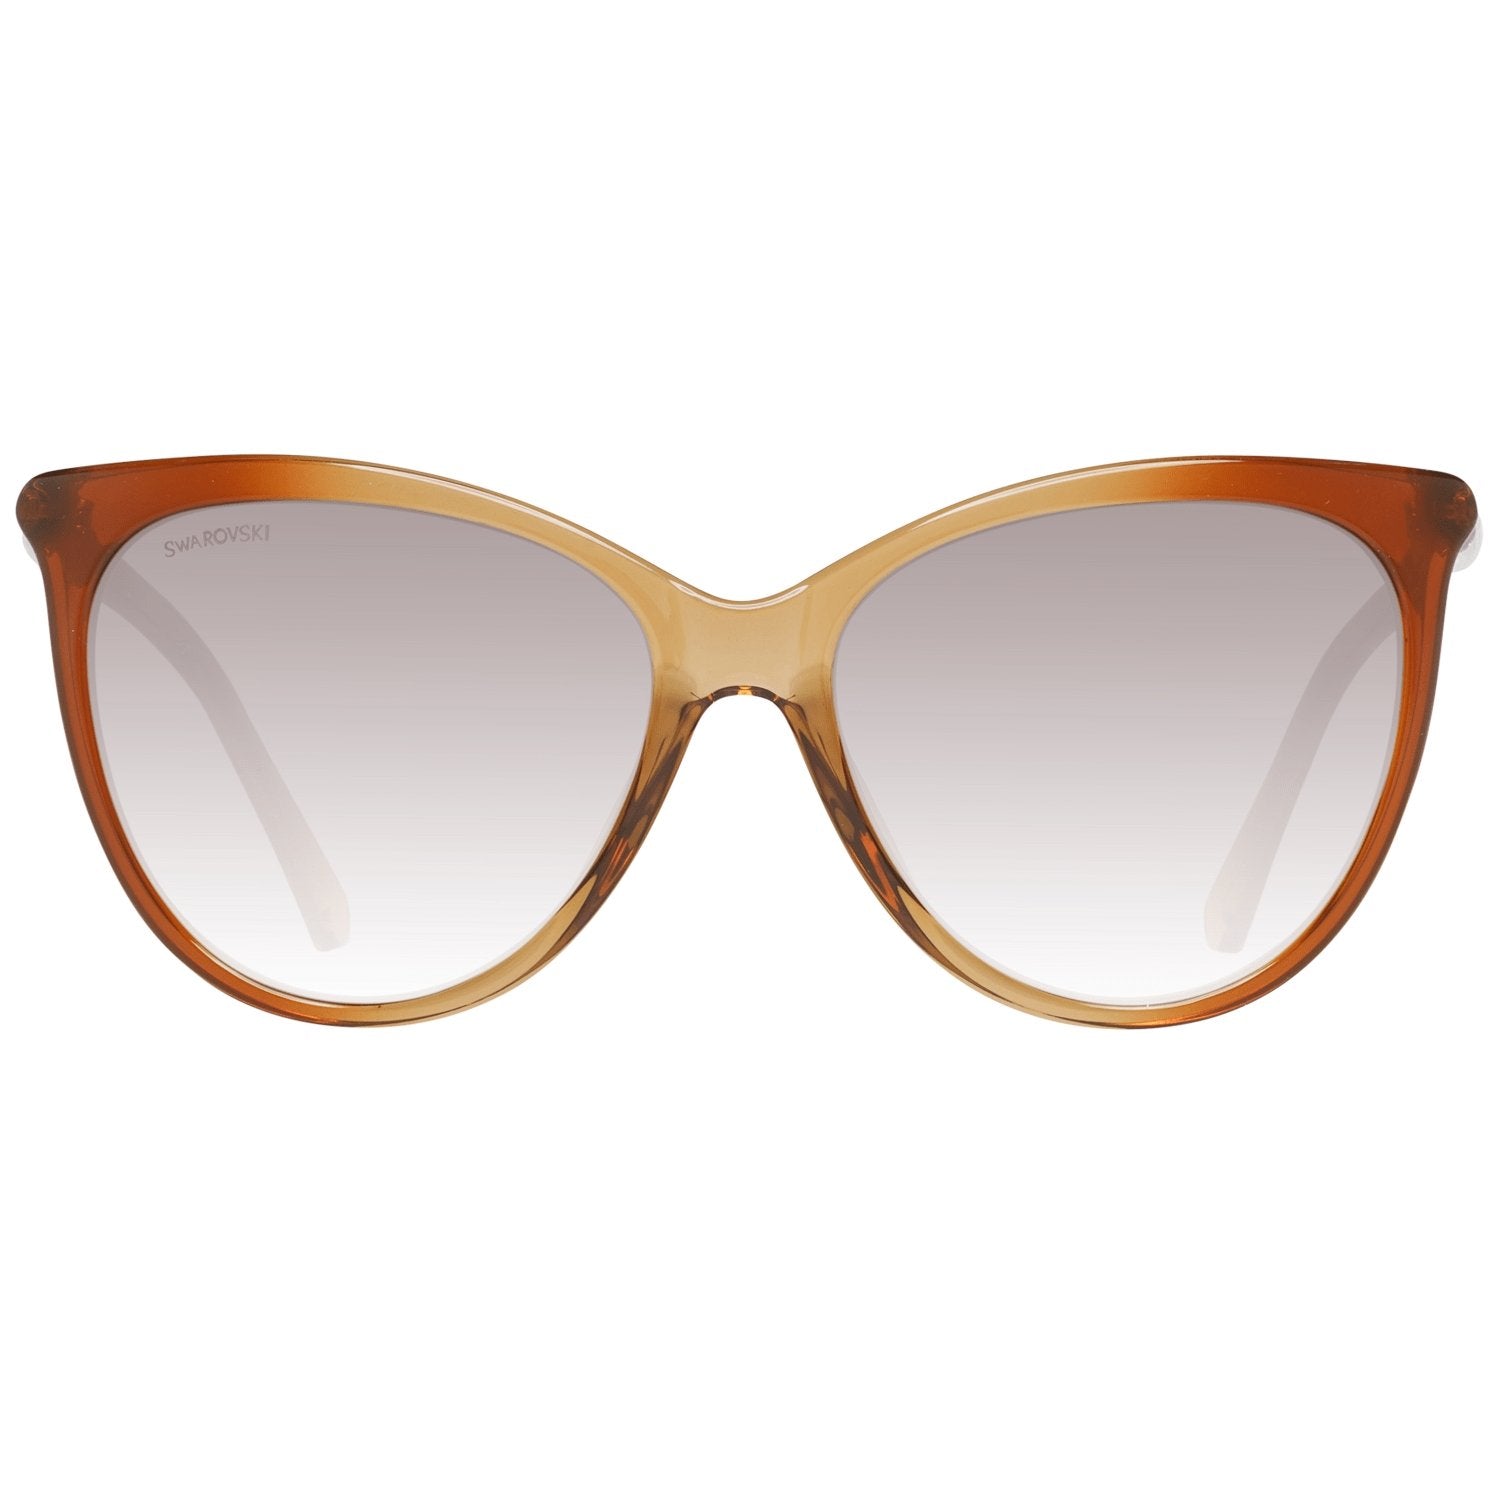 Swarovski Brown Sunglasses for Woman - Fizigo